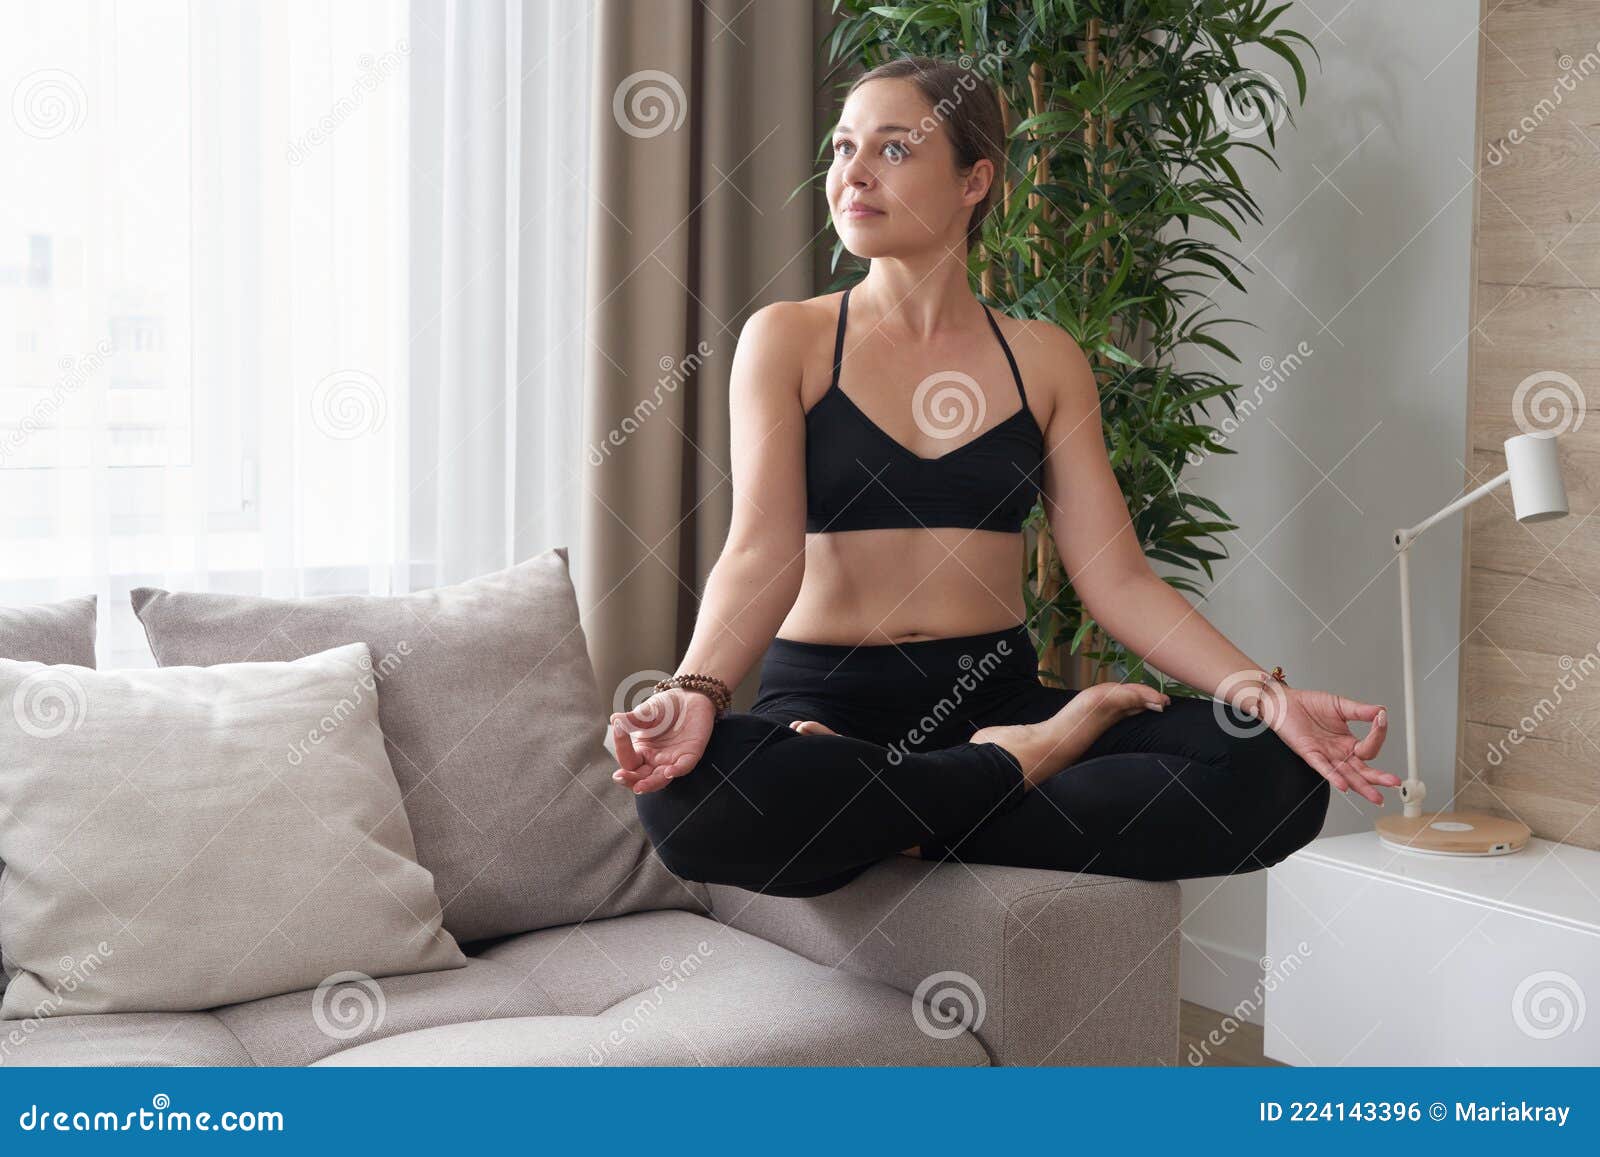 People characters meditating sitting cross-legged Vector Image